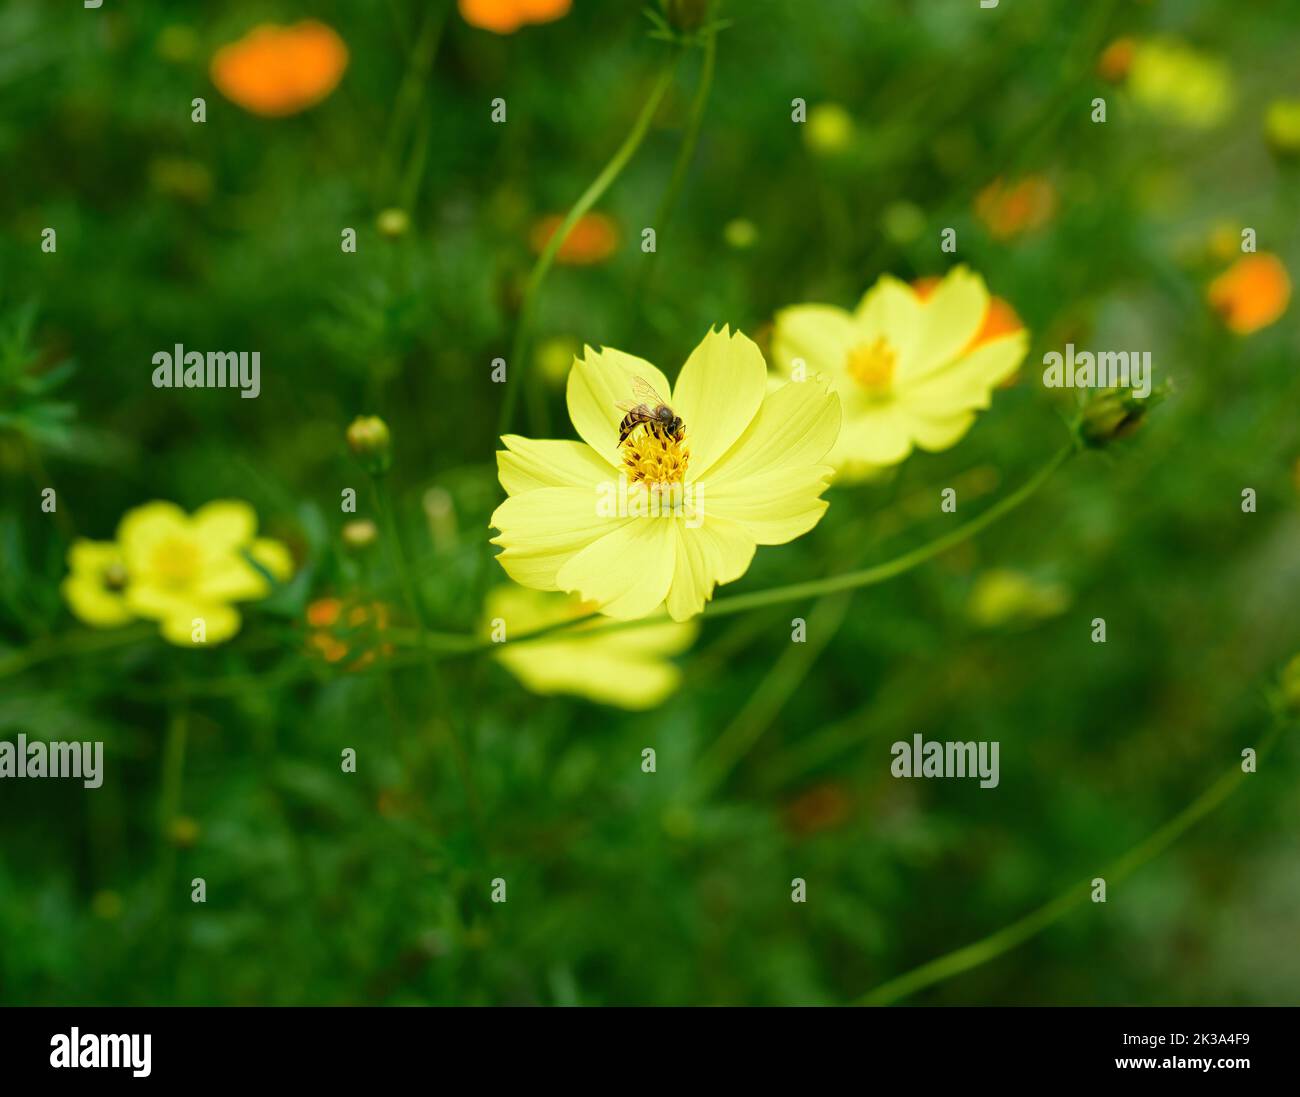 Bee pollinating Cosmos sulphureus or sulfur cosmos flowers growing in Vietnam closeup Stock Photo